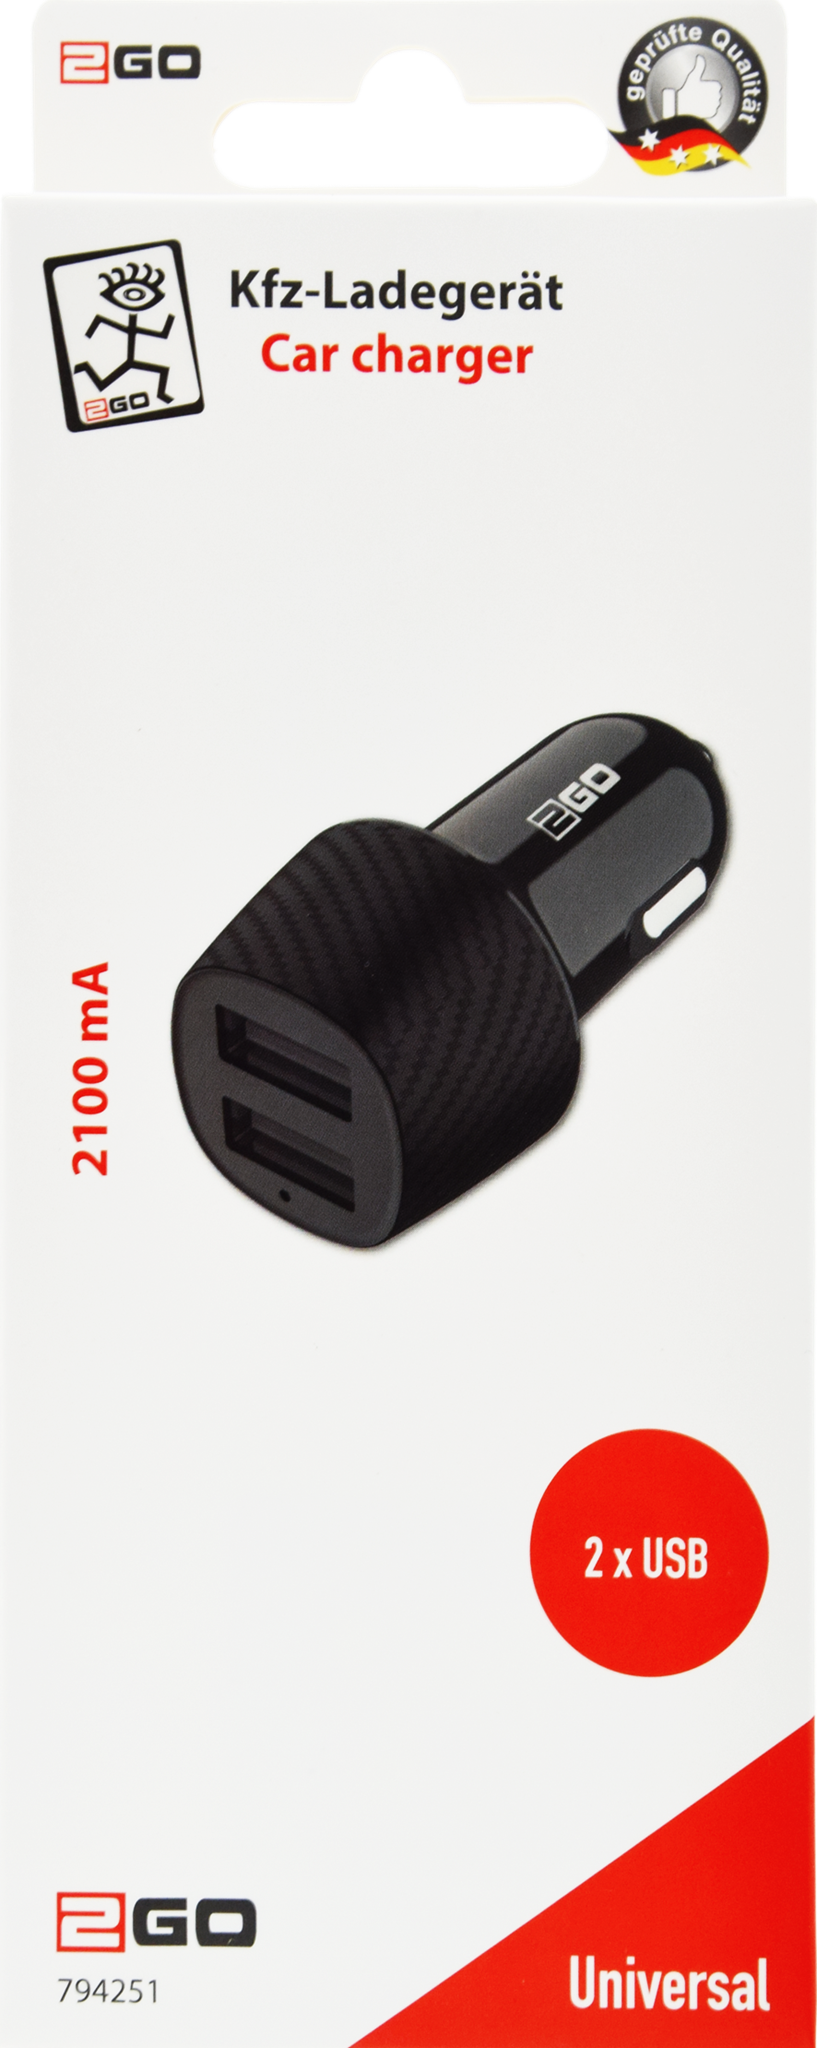 2GO-Mobile.net -B2B-. Universal Dual-USB Kfz-Ladegerät 12V/24V 2A, schwarz